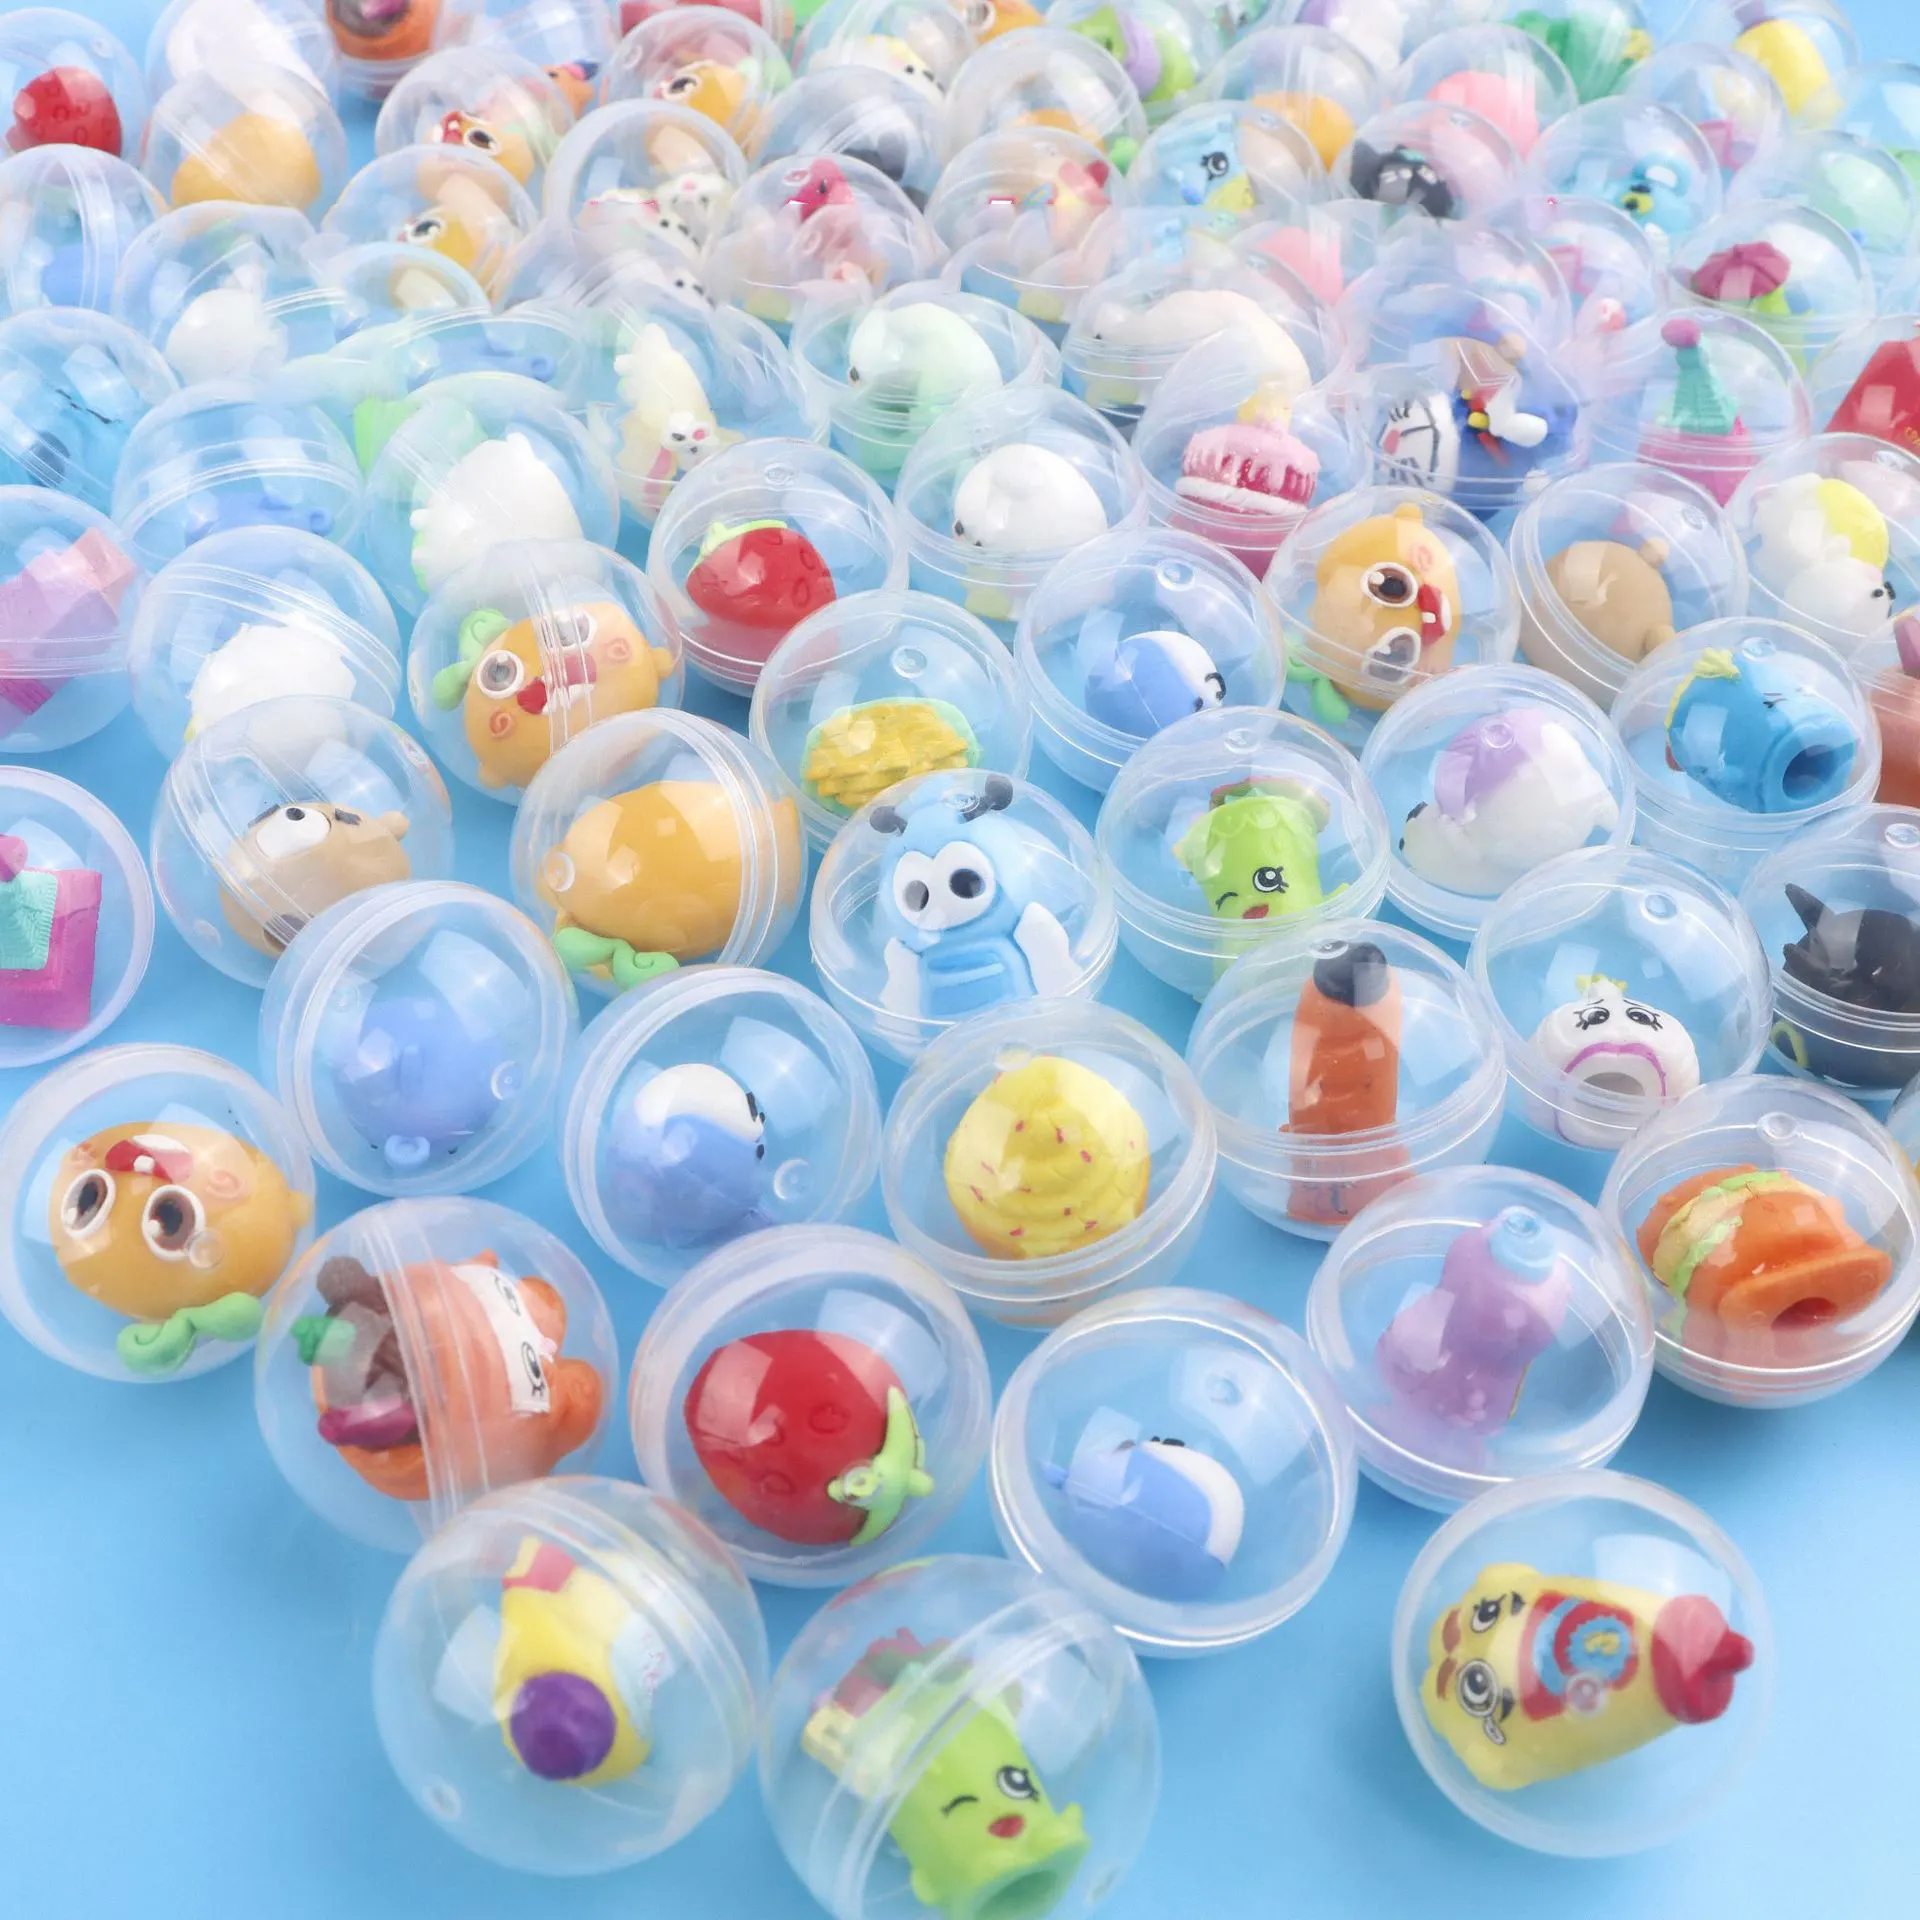 कैप्सूल गुड़िया घुमा मशीन खिलौना कैंडी मशीन अंडा घुमा मशीन पारदर्शी प्लास्टिक की गेंद कैप्सूल खिलौने